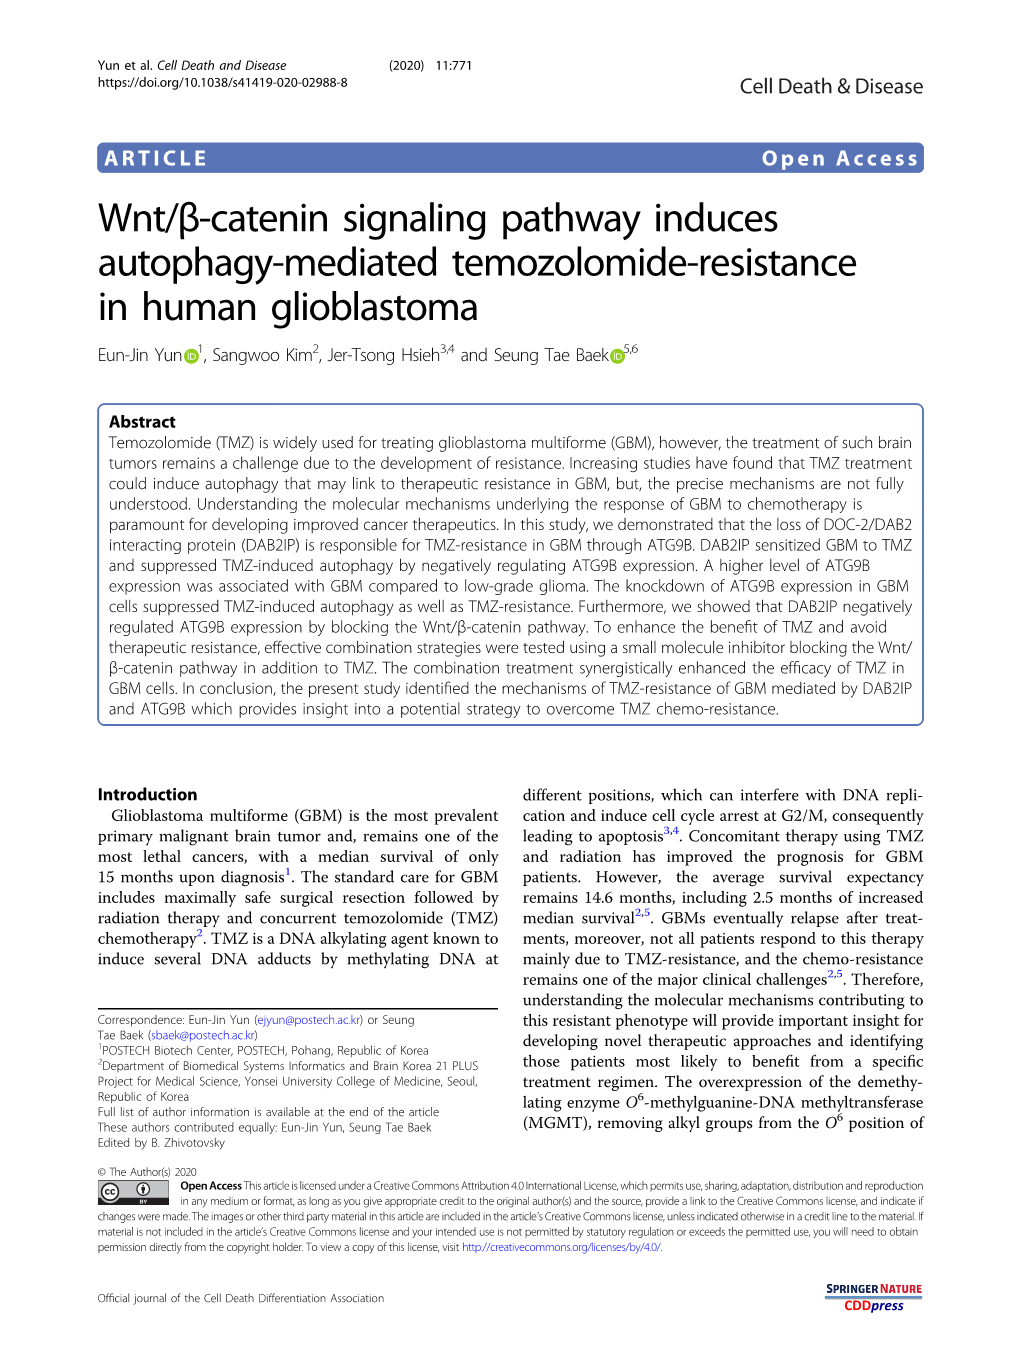 Wnt/Β-Catenin Signaling Pathway Induces Autophagy